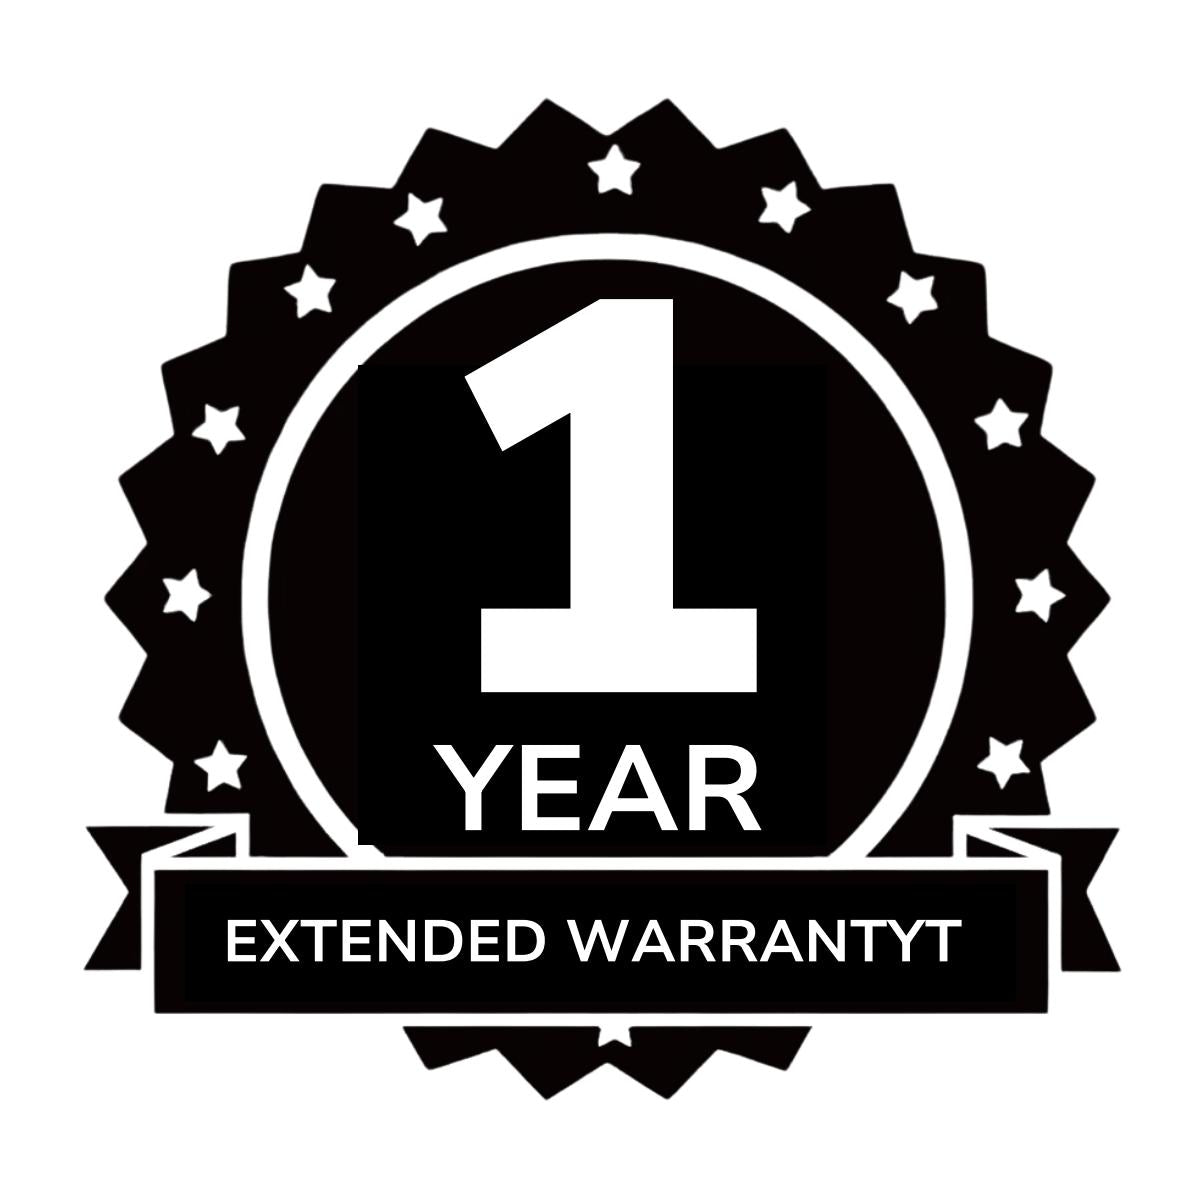 Extended Warranty Service